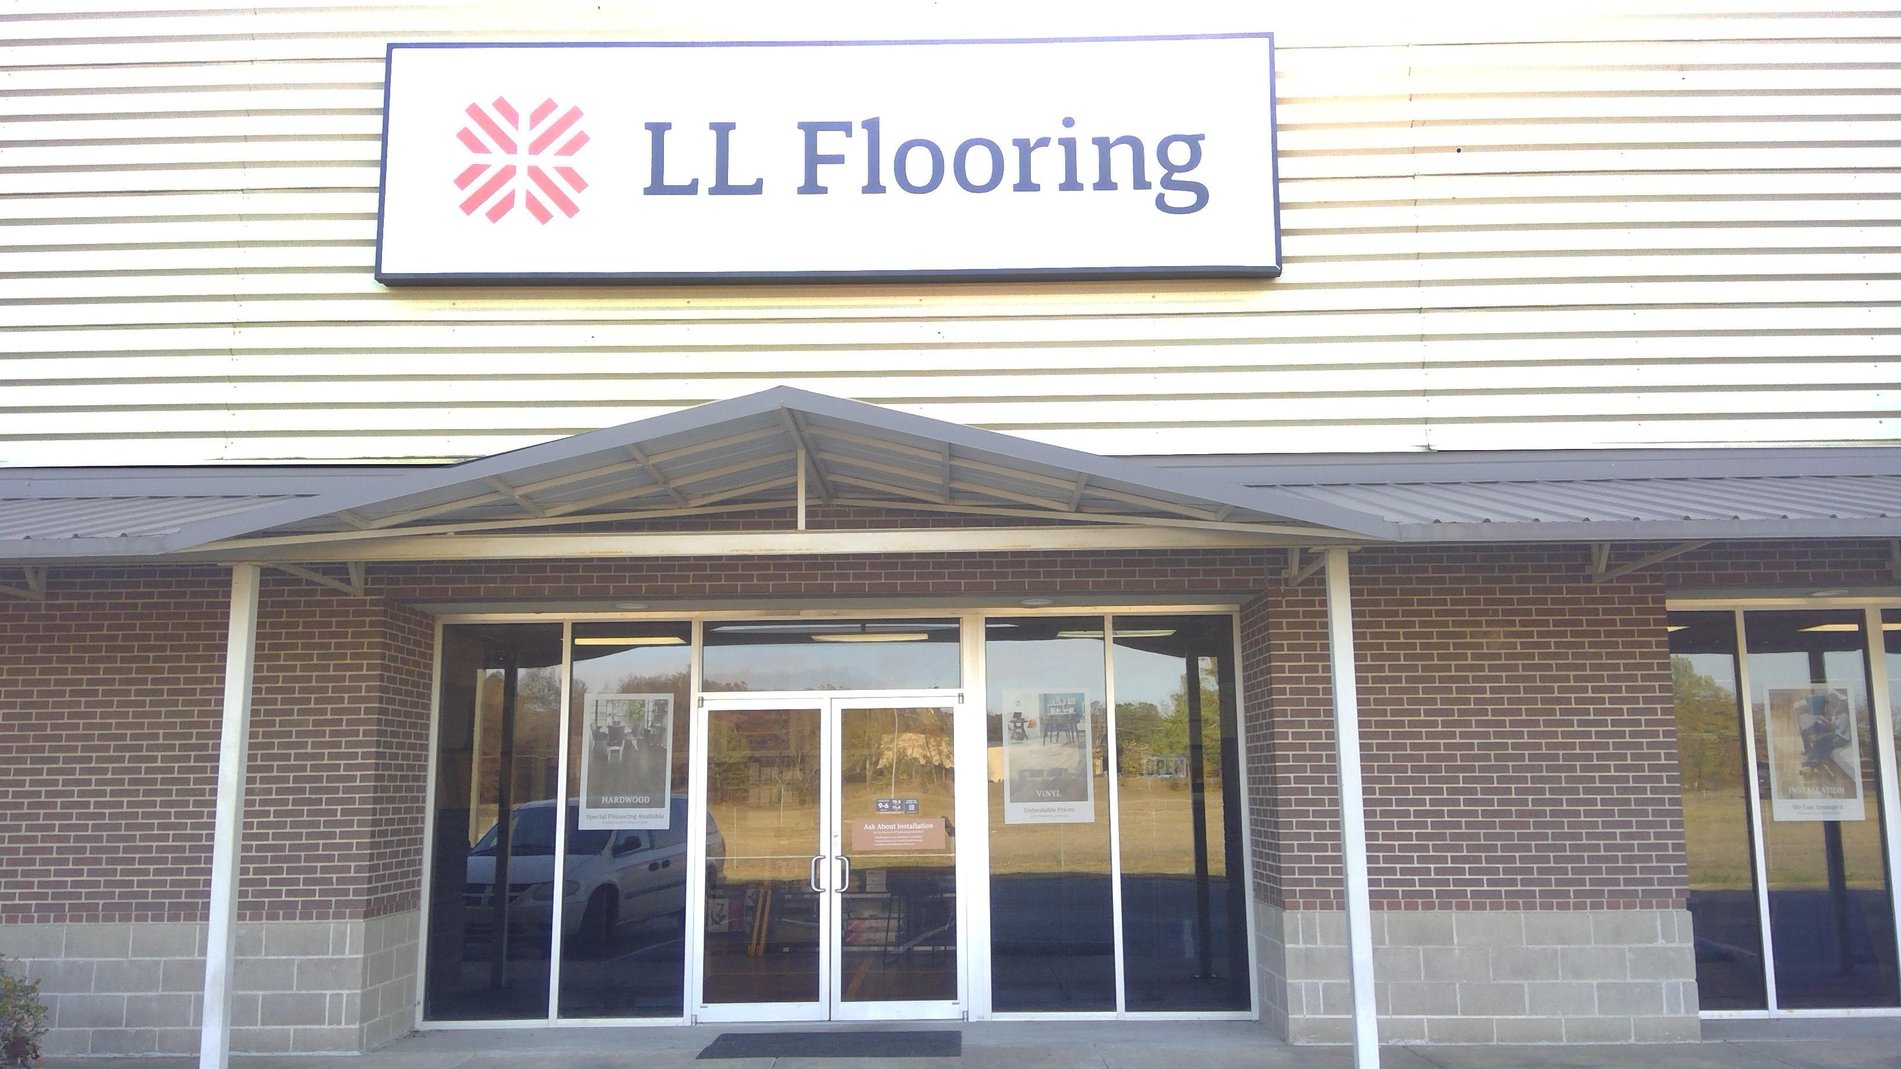 LL Flooring #1078 - Jackson | Storefront